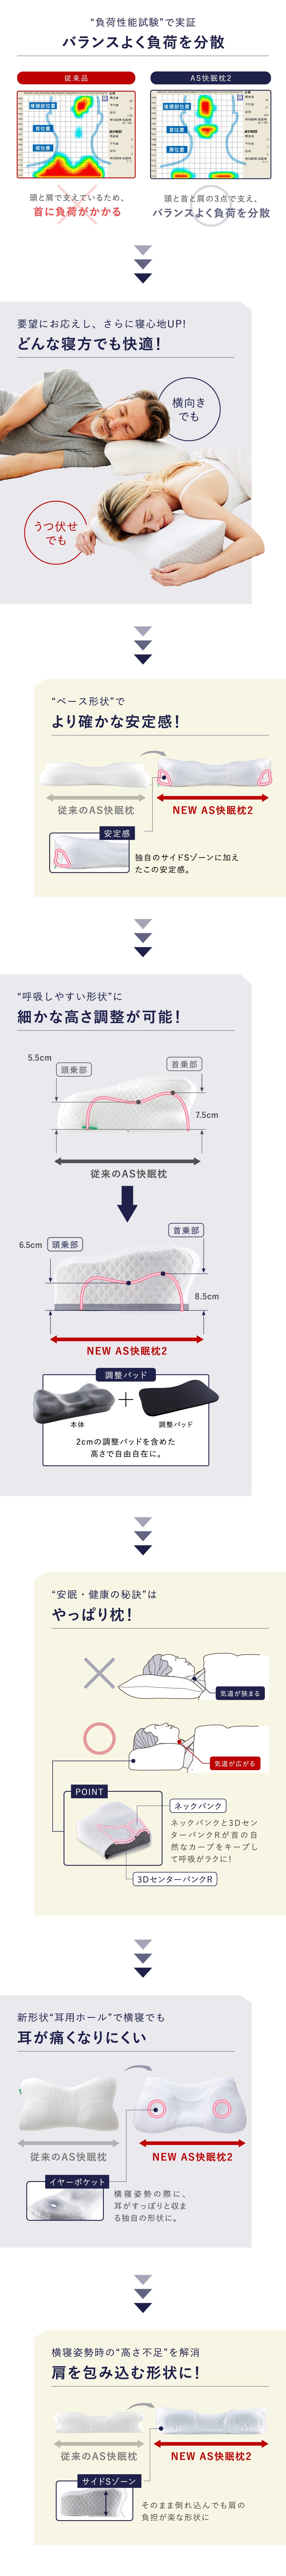 SU-ZI - SS Snoring Sleeping Pillow｜Super Comfort (AS Sleeping Pillow Evolution Version)｜AS Sleeping Pillow 2｜With Heightening Pad